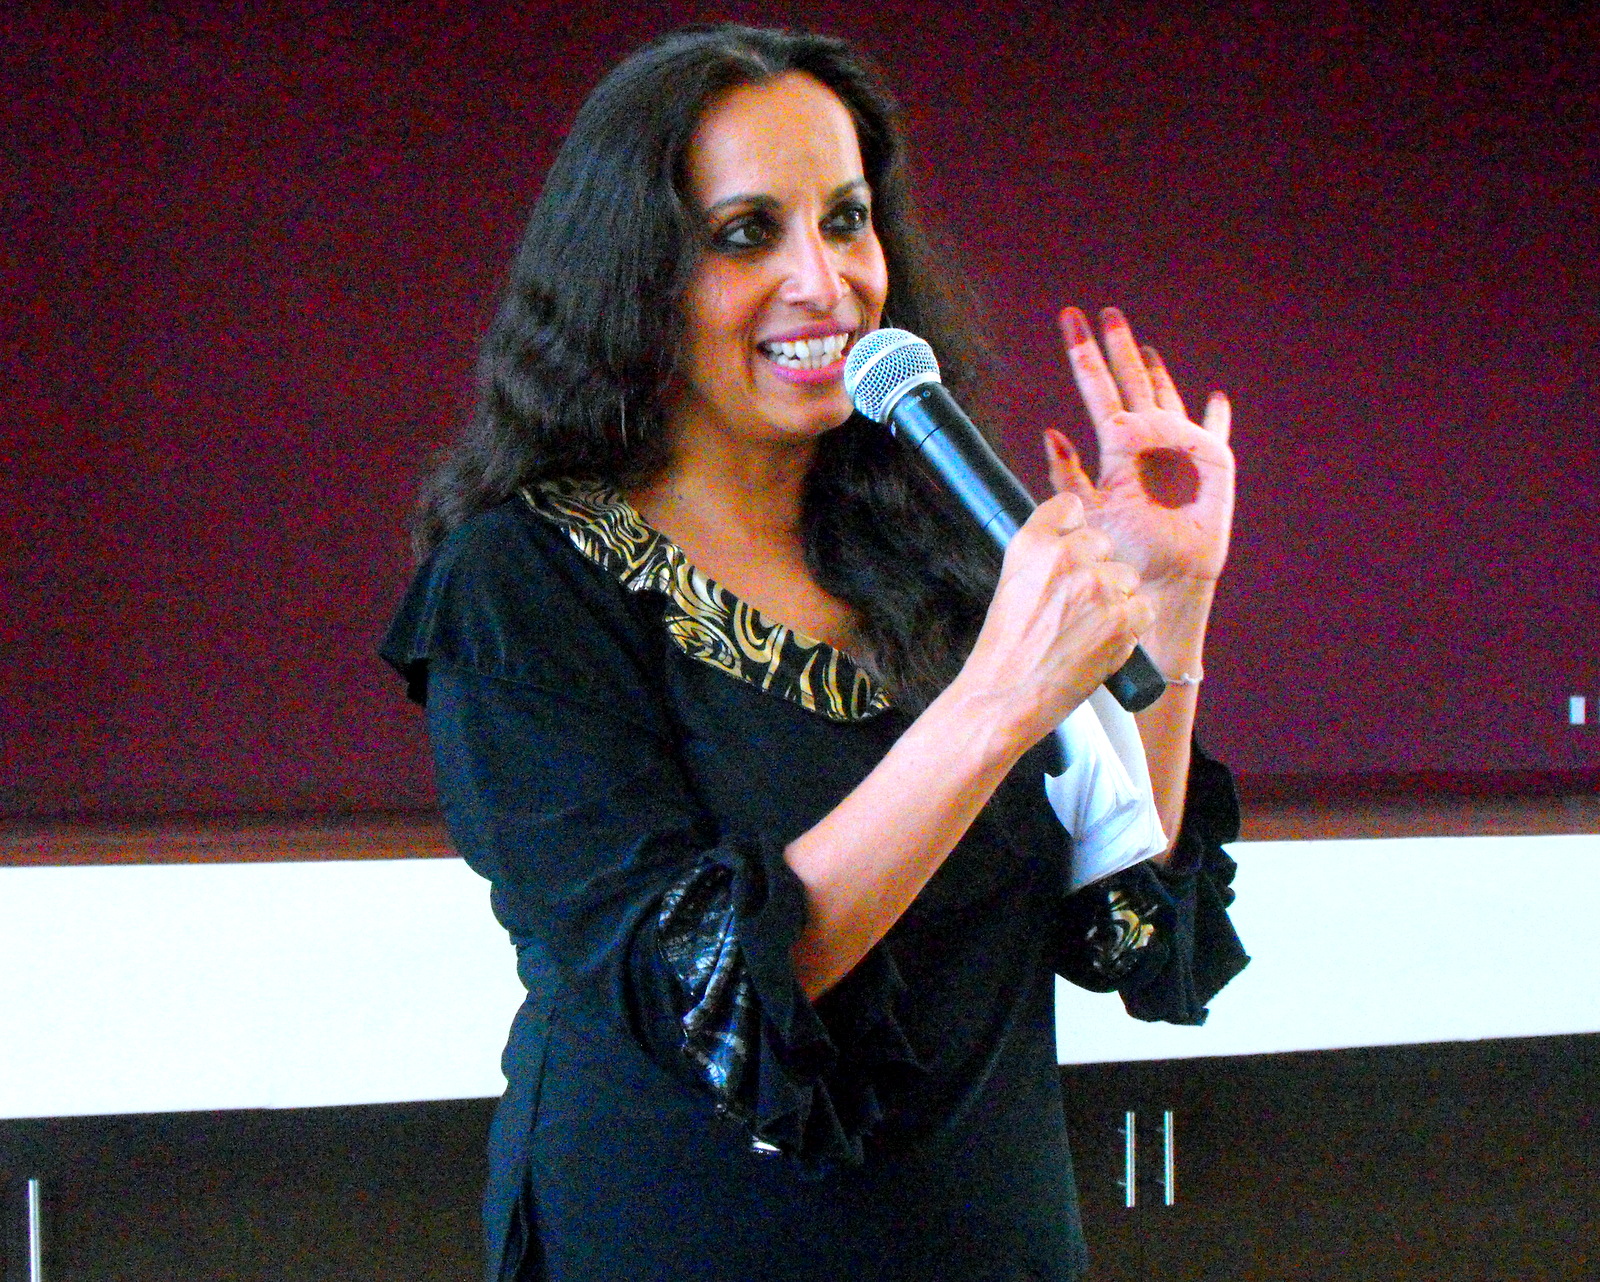 Shebana Coelho, a renowned performance artist, writer and filmmaker, visited ASCC